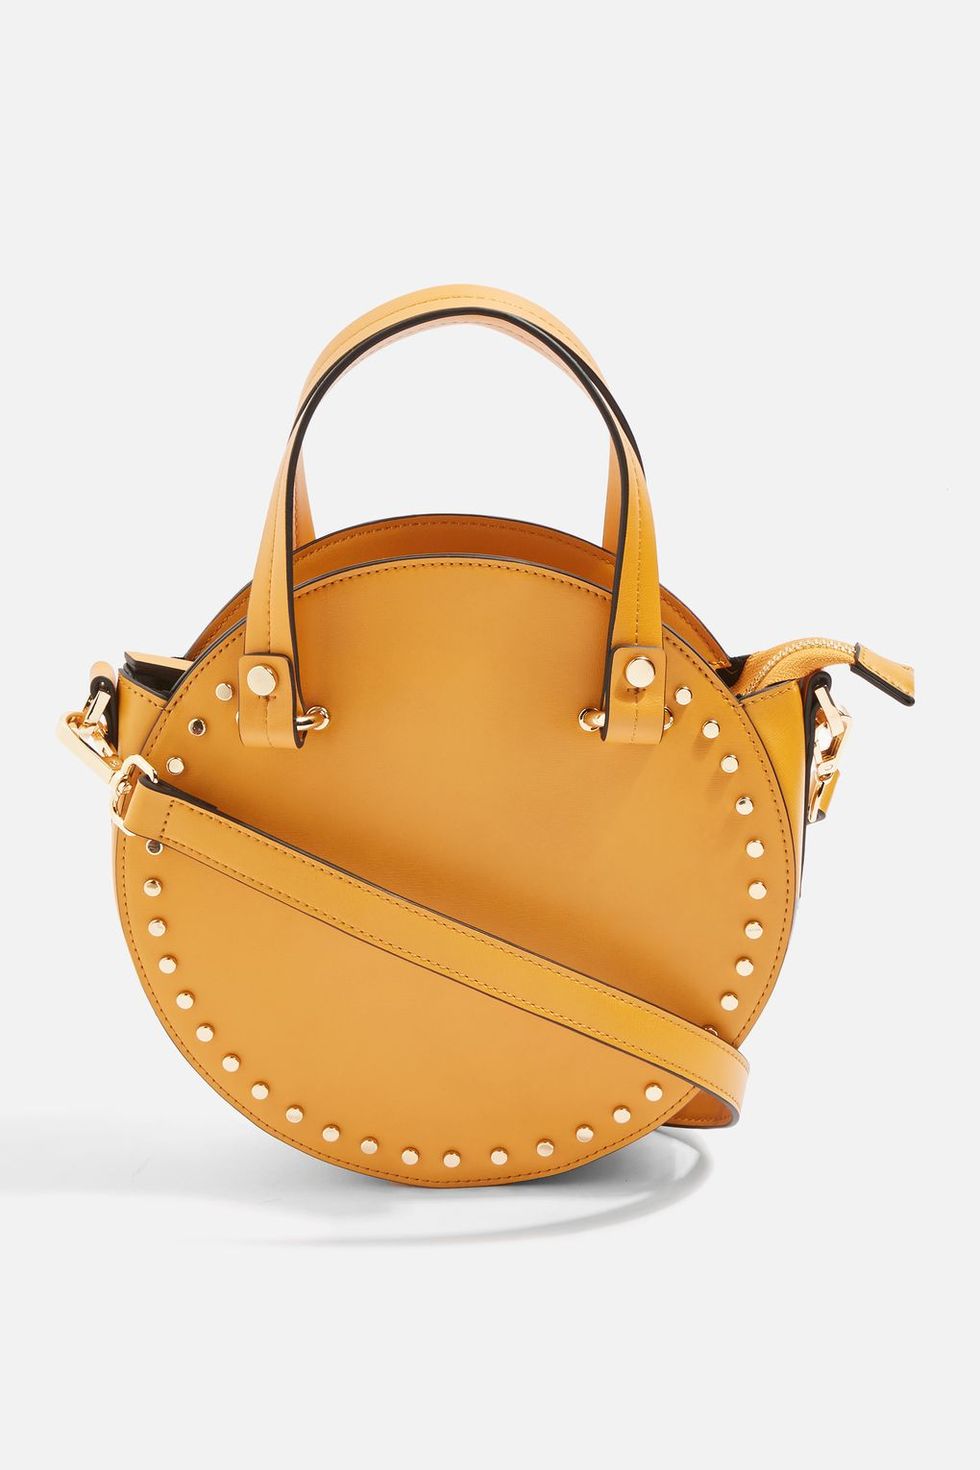 Handbag, Bag, Fashion accessory, Leather, Yellow, Tan, Shoulder bag, Brown, Beige, Tote bag, 